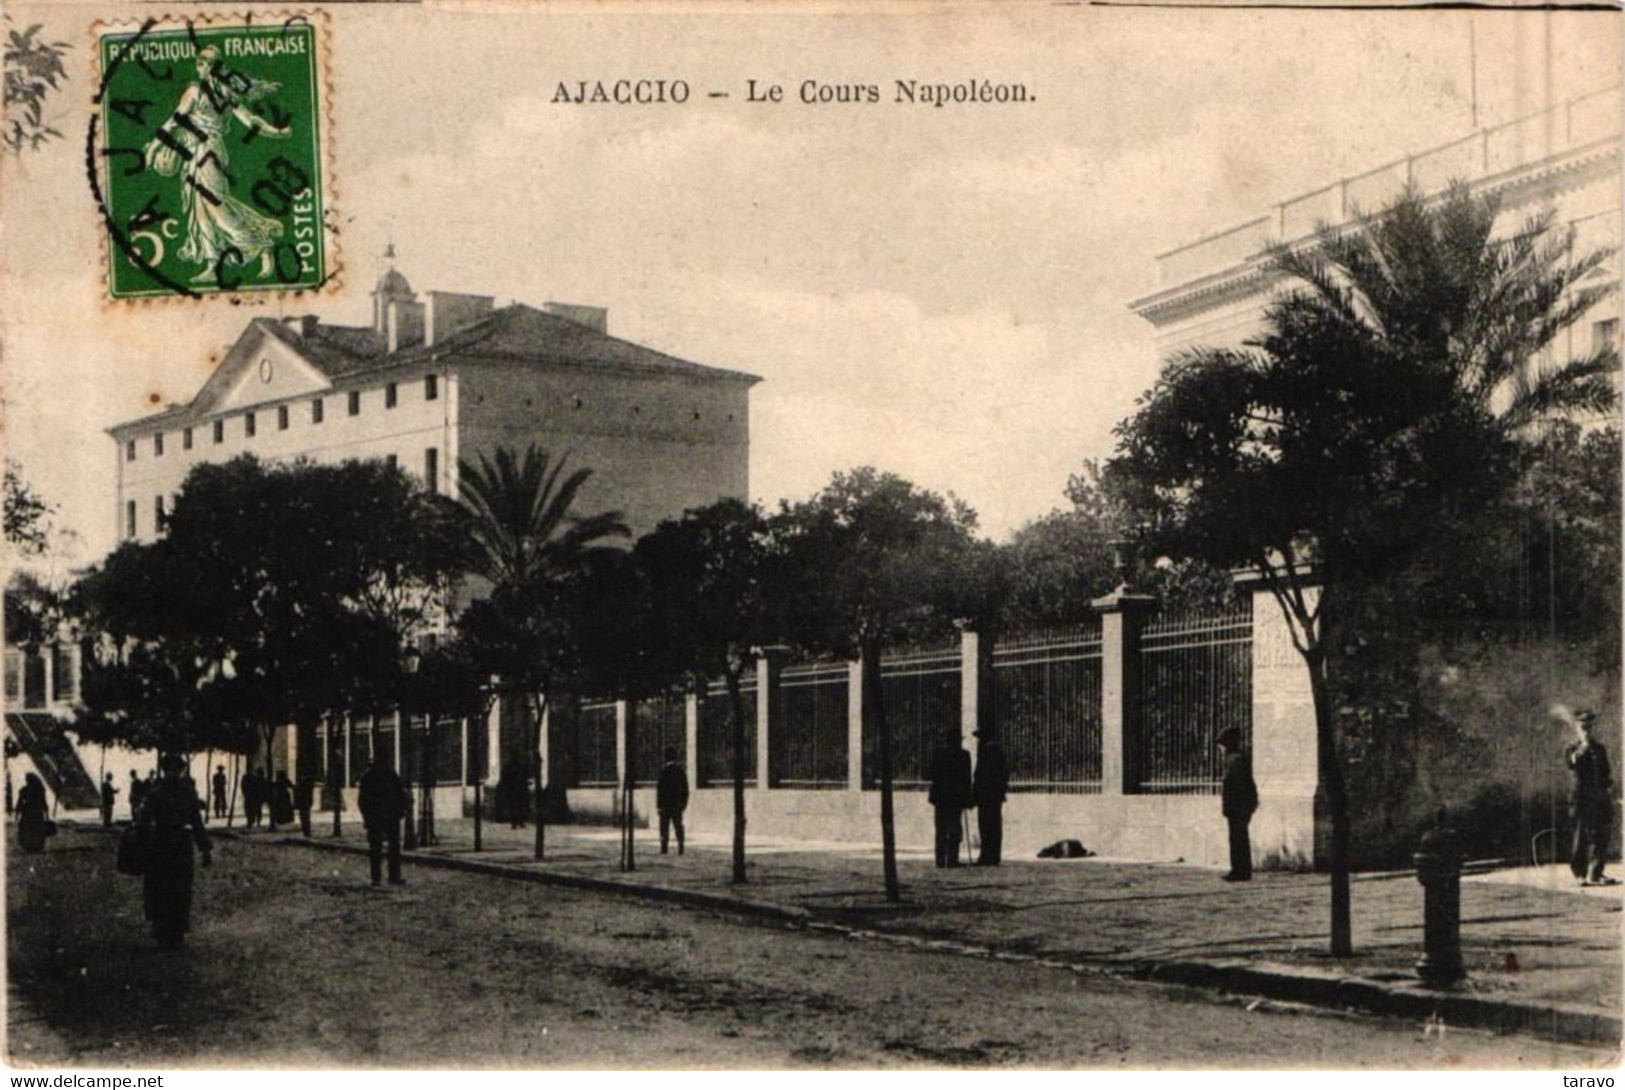 CORSE  - AJACCIO - Le Cours Napoléon - La Caserne - Animation 1908 - Ajaccio